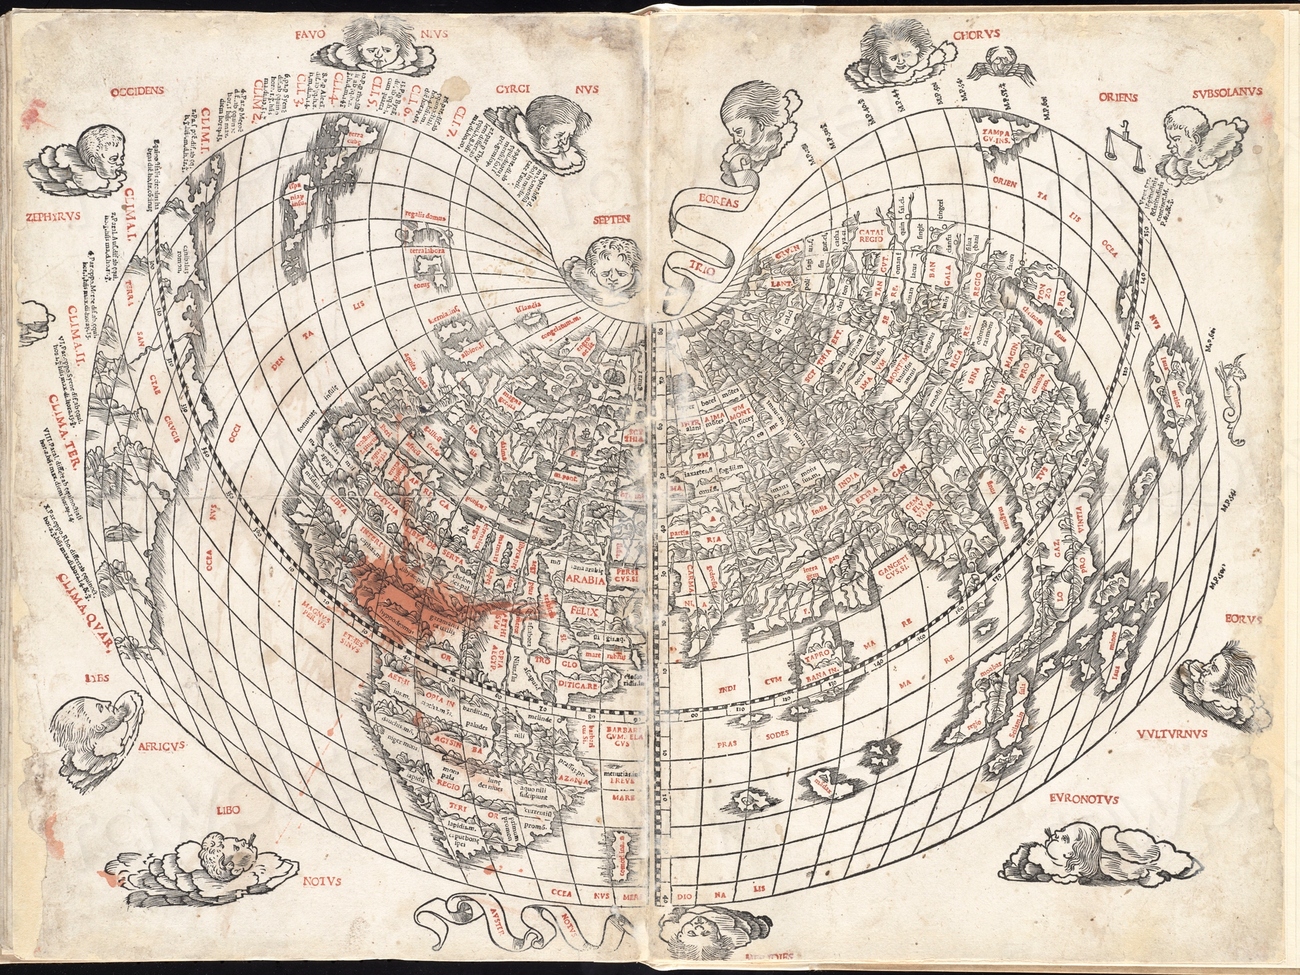 World map - David Graeber's Debt delves into ancient times